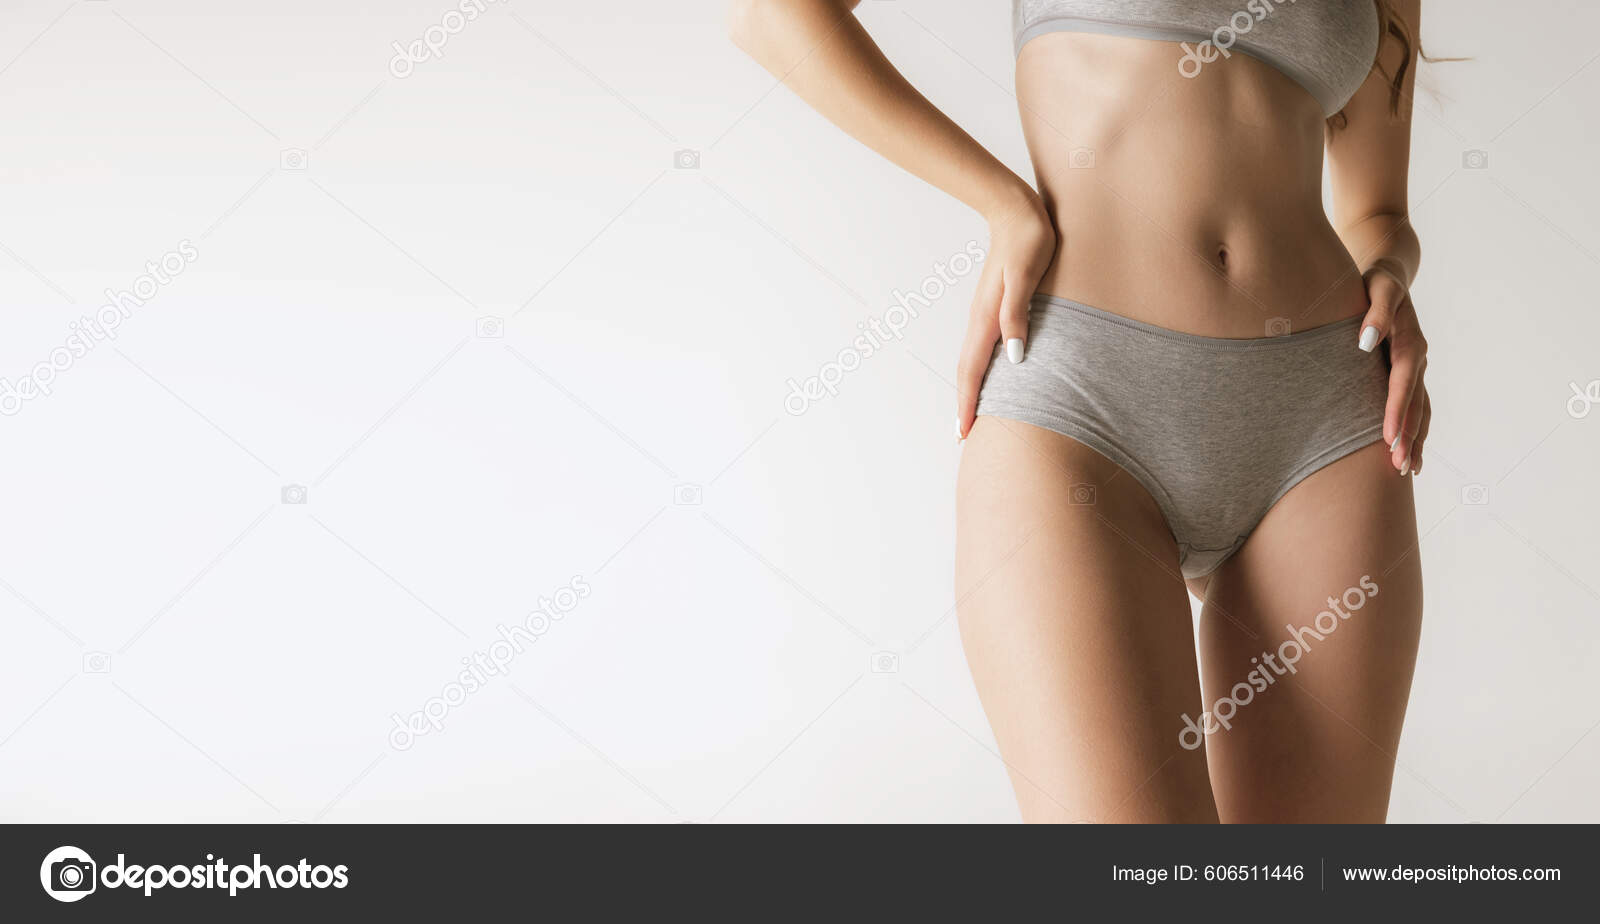 https://st.depositphotos.com/3917667/60651/i/1600/depositphotos_606511446-stock-photo-belly-breast-legs-hips-cropped.jpg